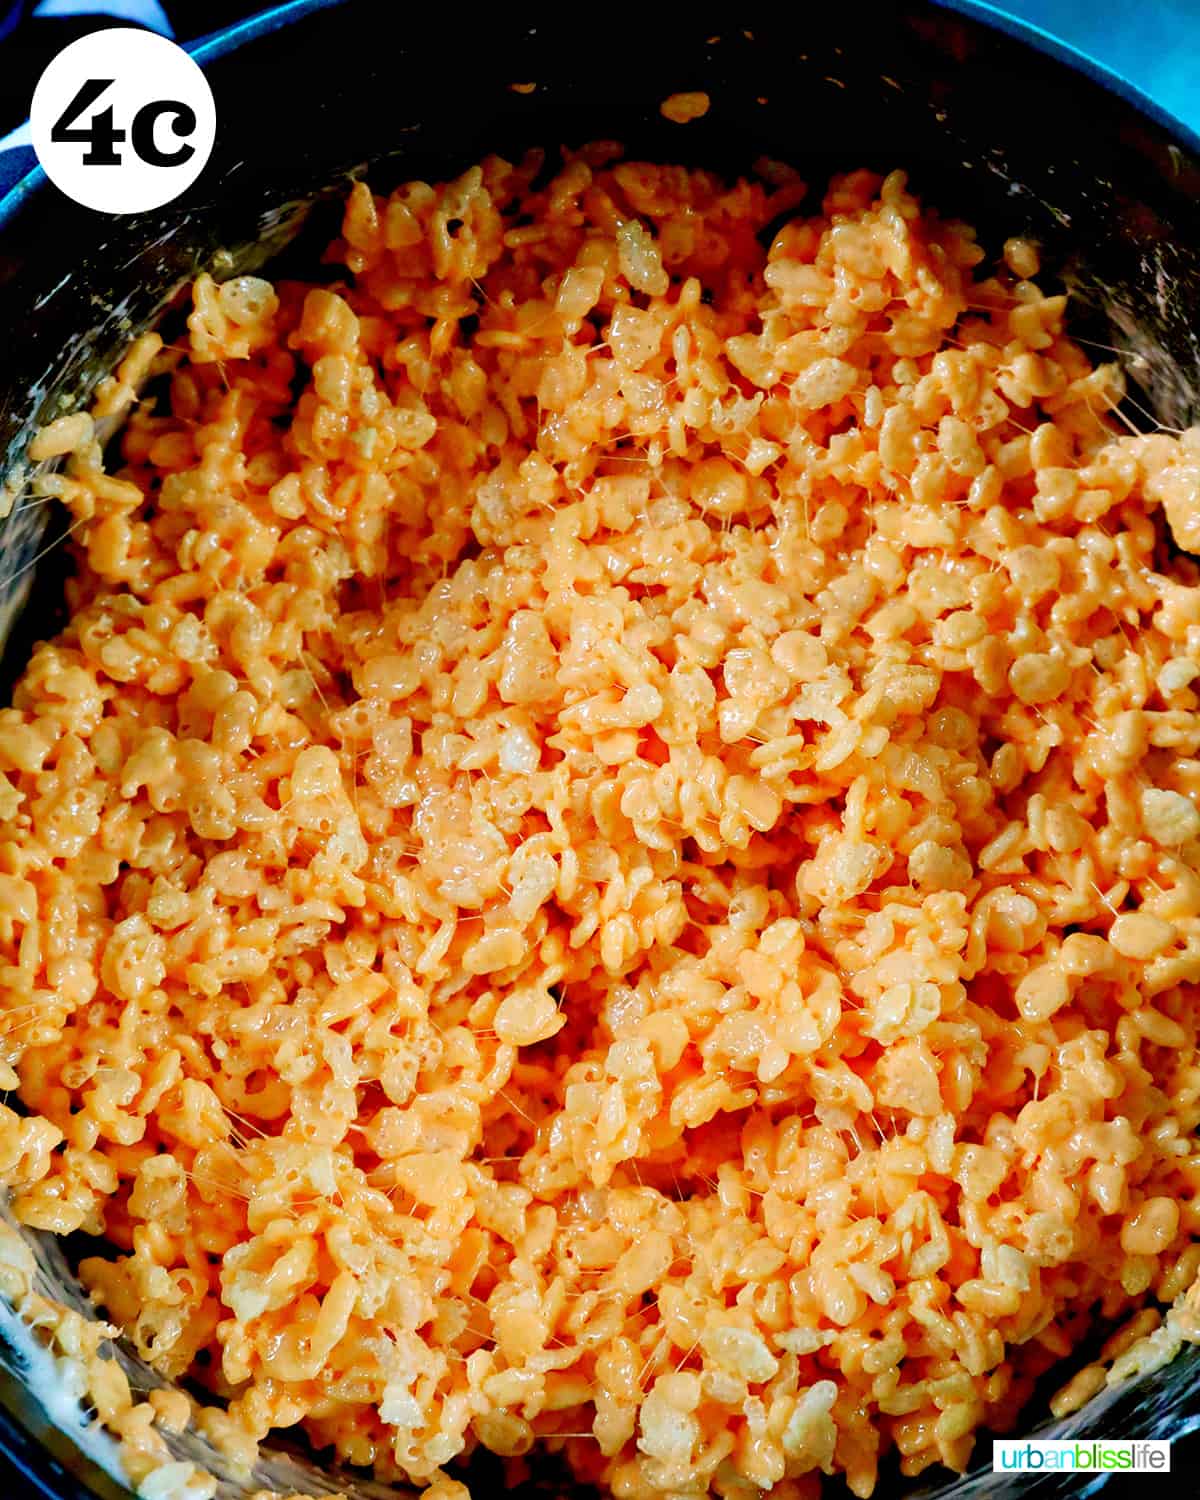 orange colored rice krispies in a dutch oven.